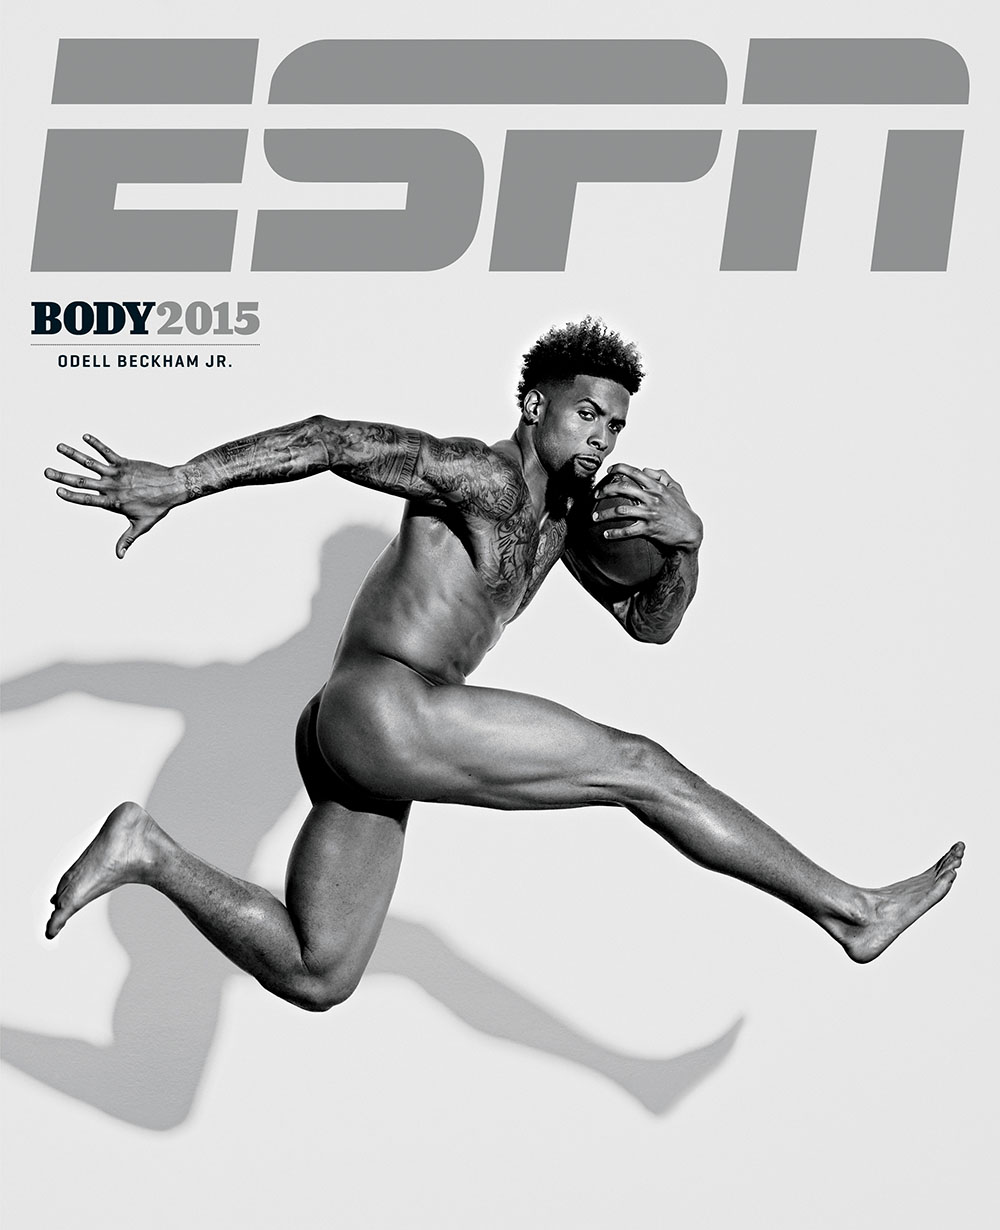 Photography News - Stunning sporty nudes by ESPN Odell Beckham Jr. photogra...